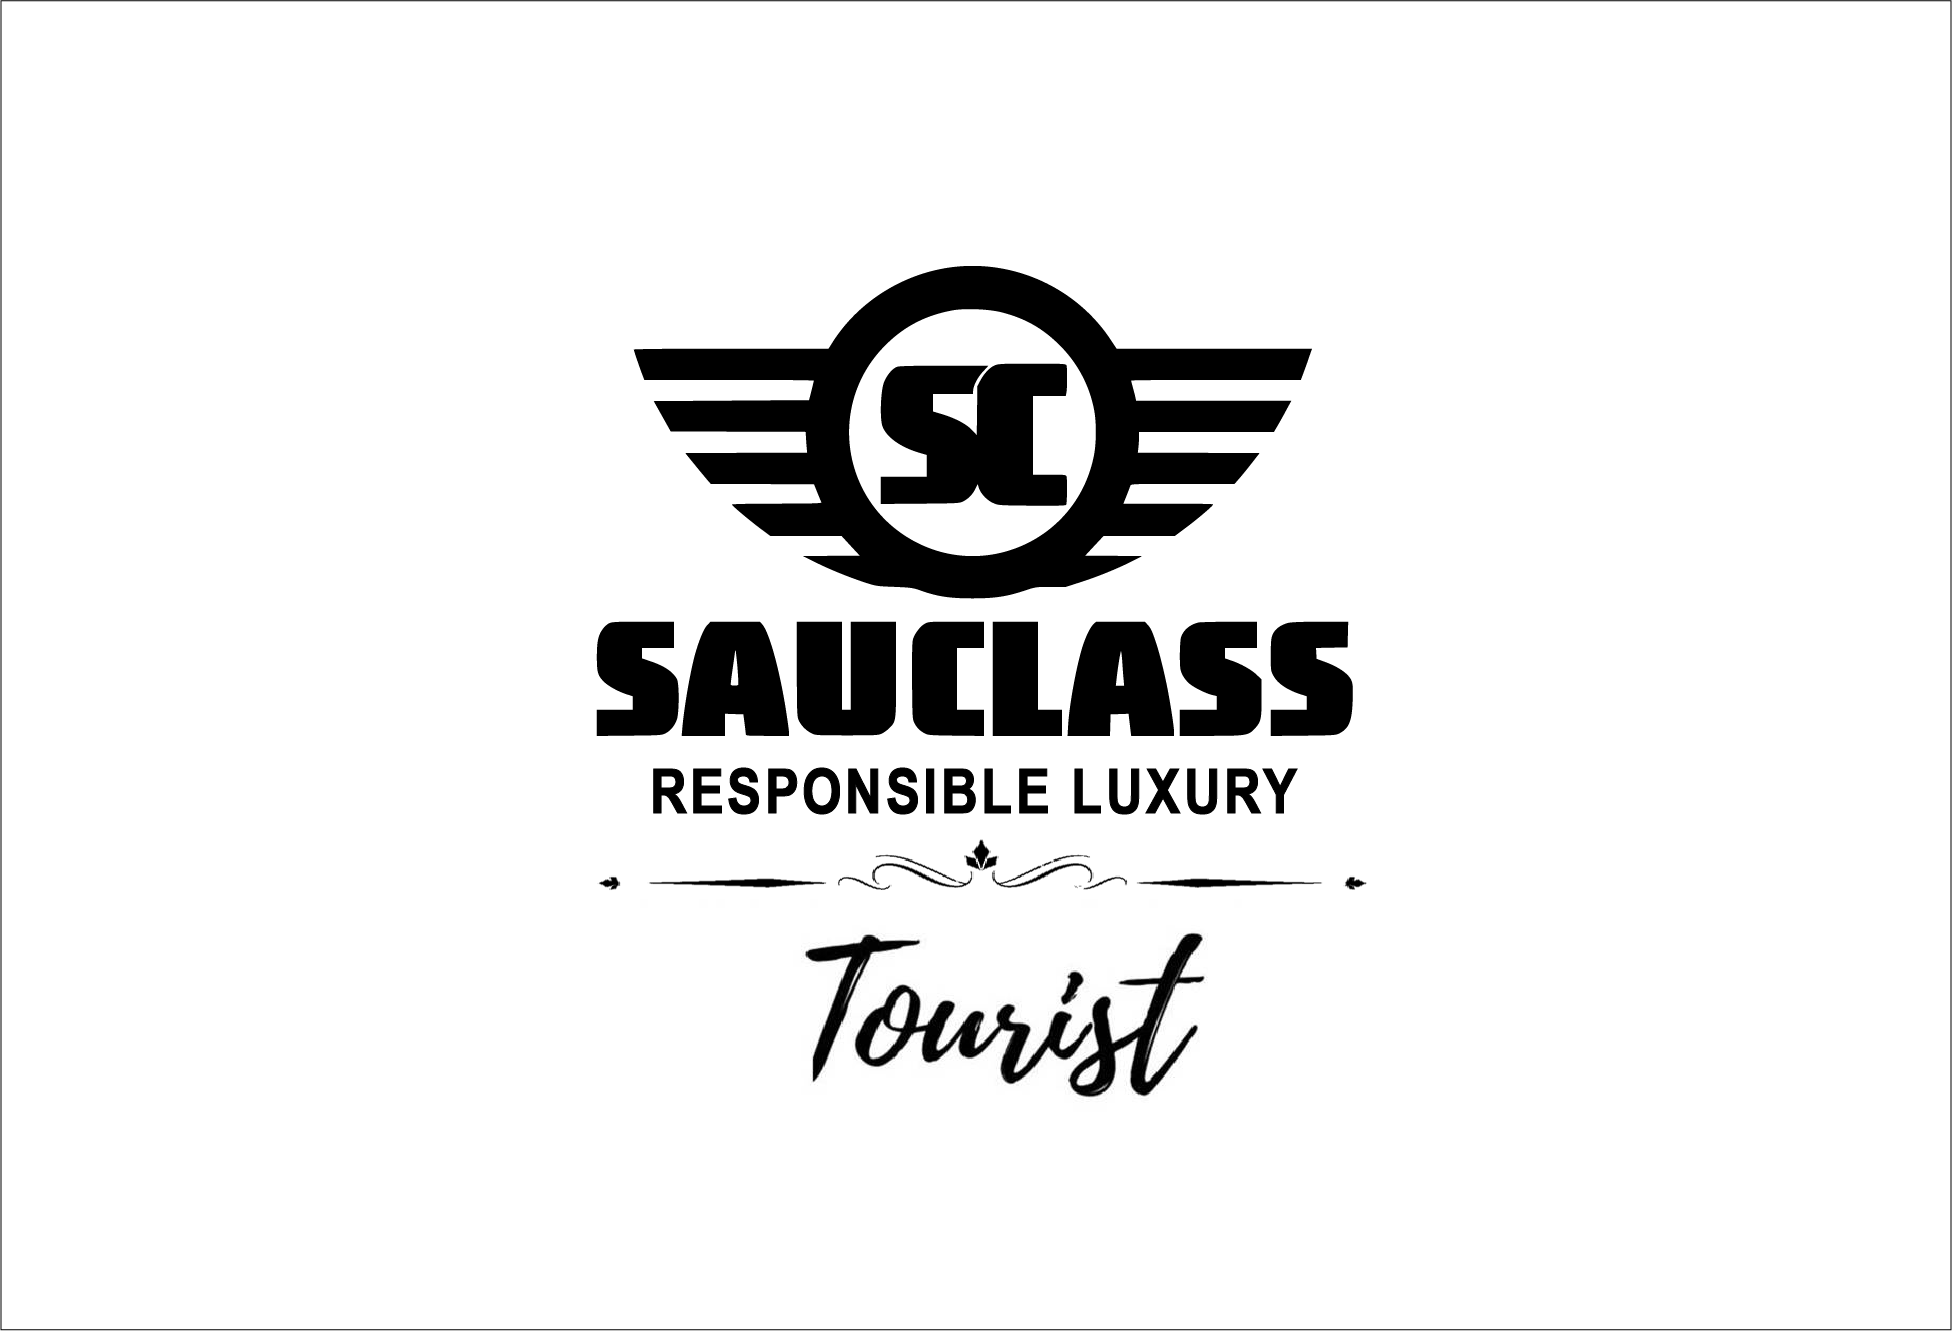 Sauclass-Logotipo-Tourist-fondo